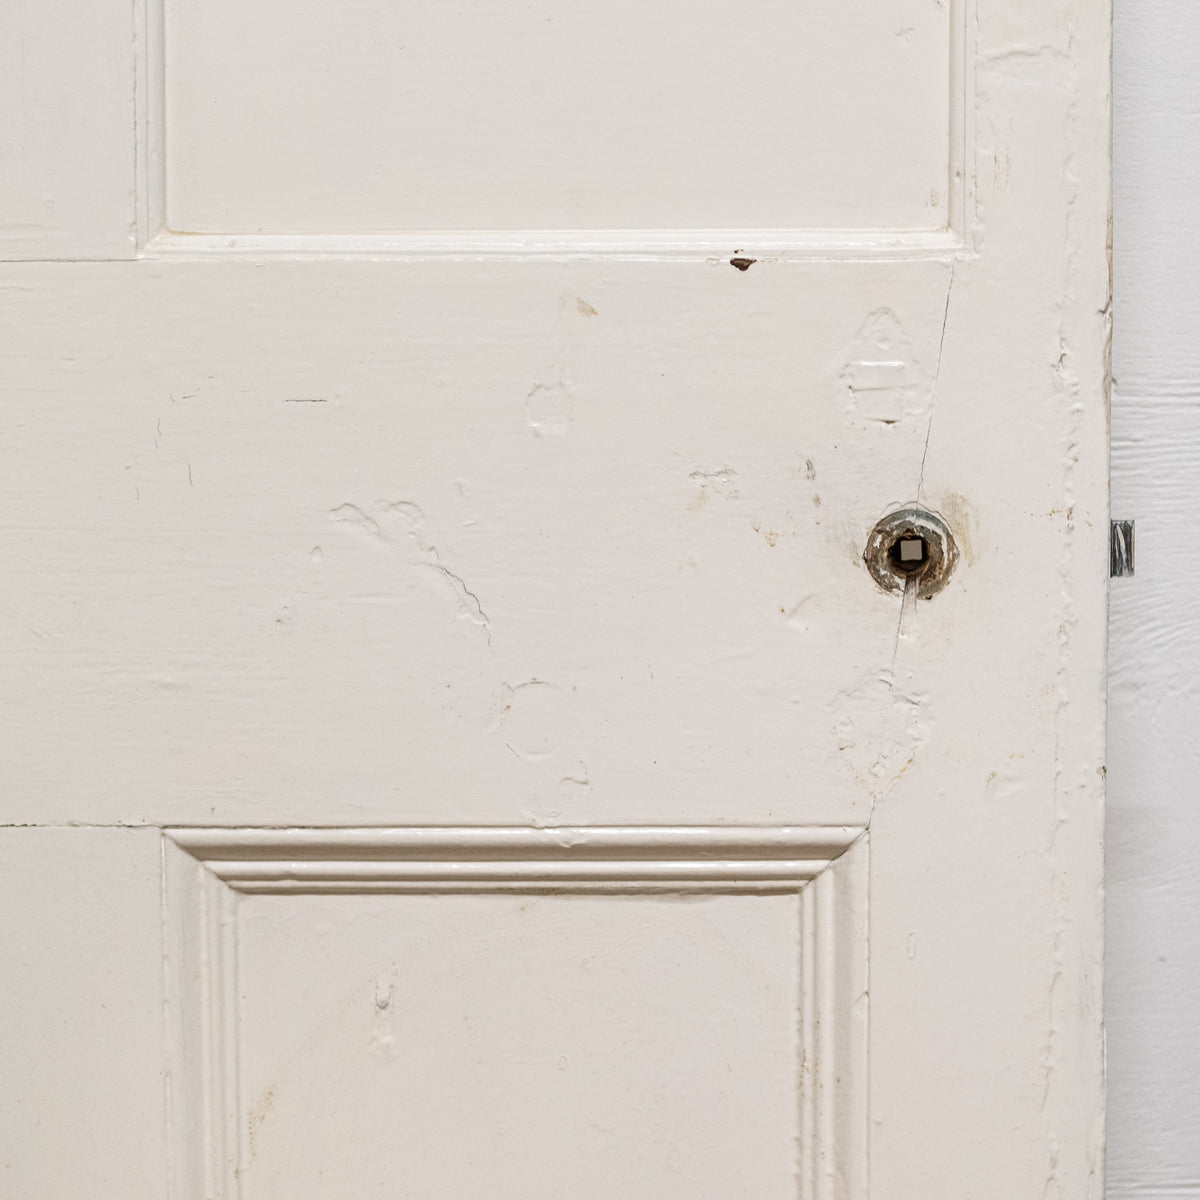 Antique Victoria Pine Panelled Door - 191cm x 82.5cm | The Architectural Forum